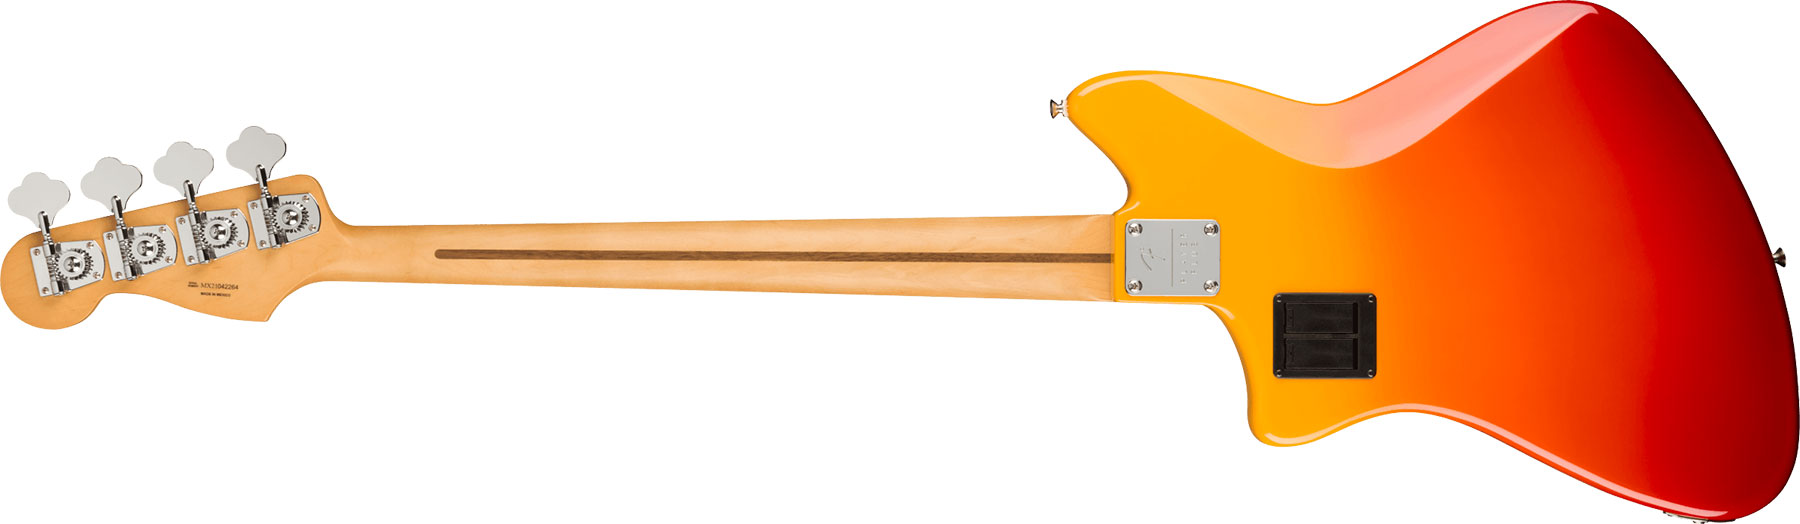 Fender Meteora Bass Active Player Plus Mex Pf - Tequila Sunrise - Bajo eléctrico de cuerpo sólido - Variation 1